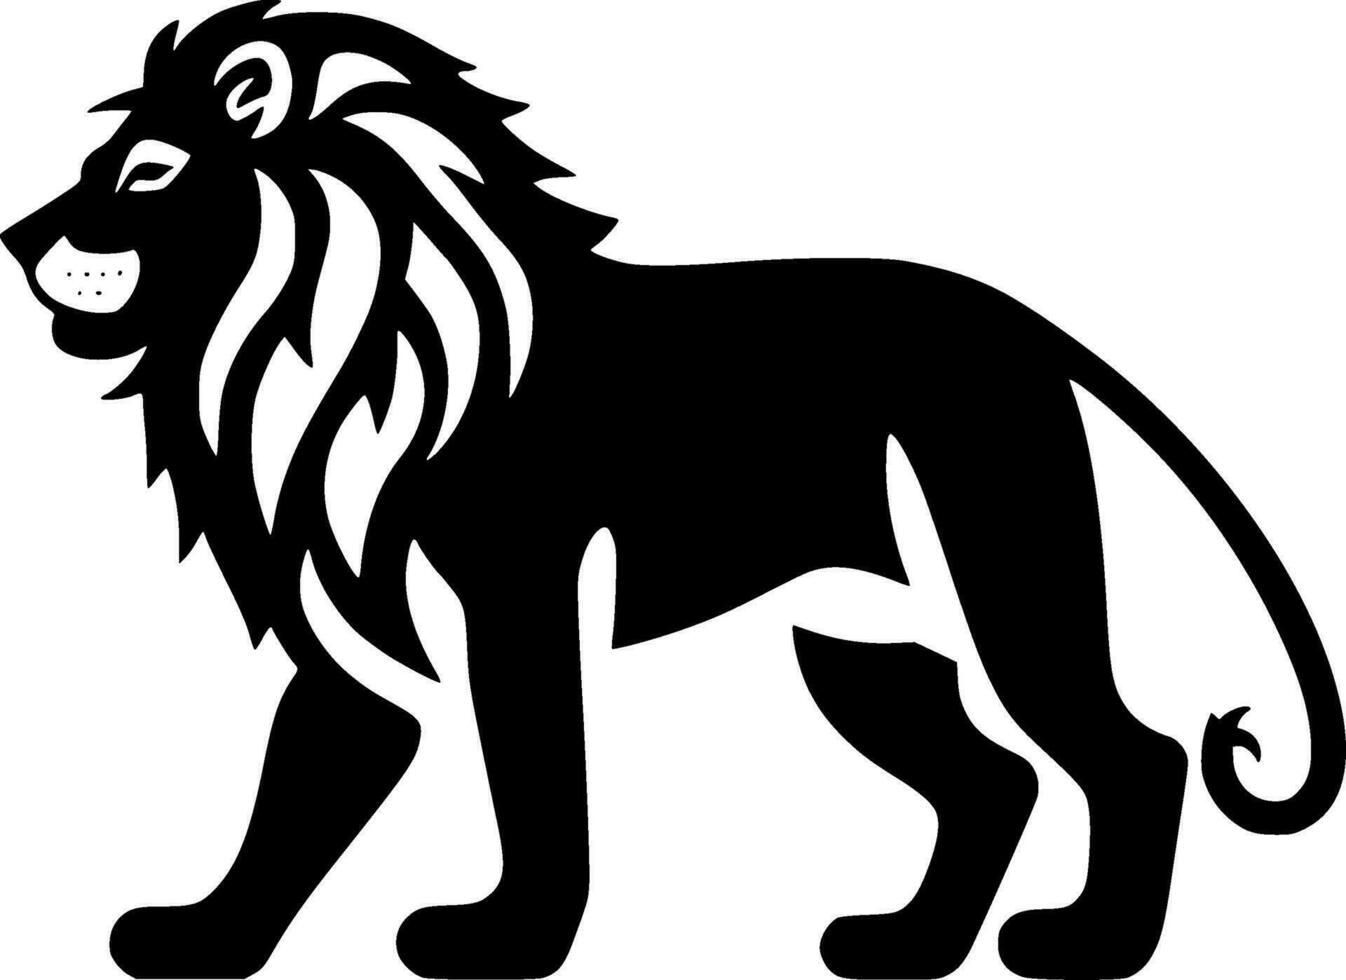 Lion, Minimalist and Simple Silhouette - Vector illustration